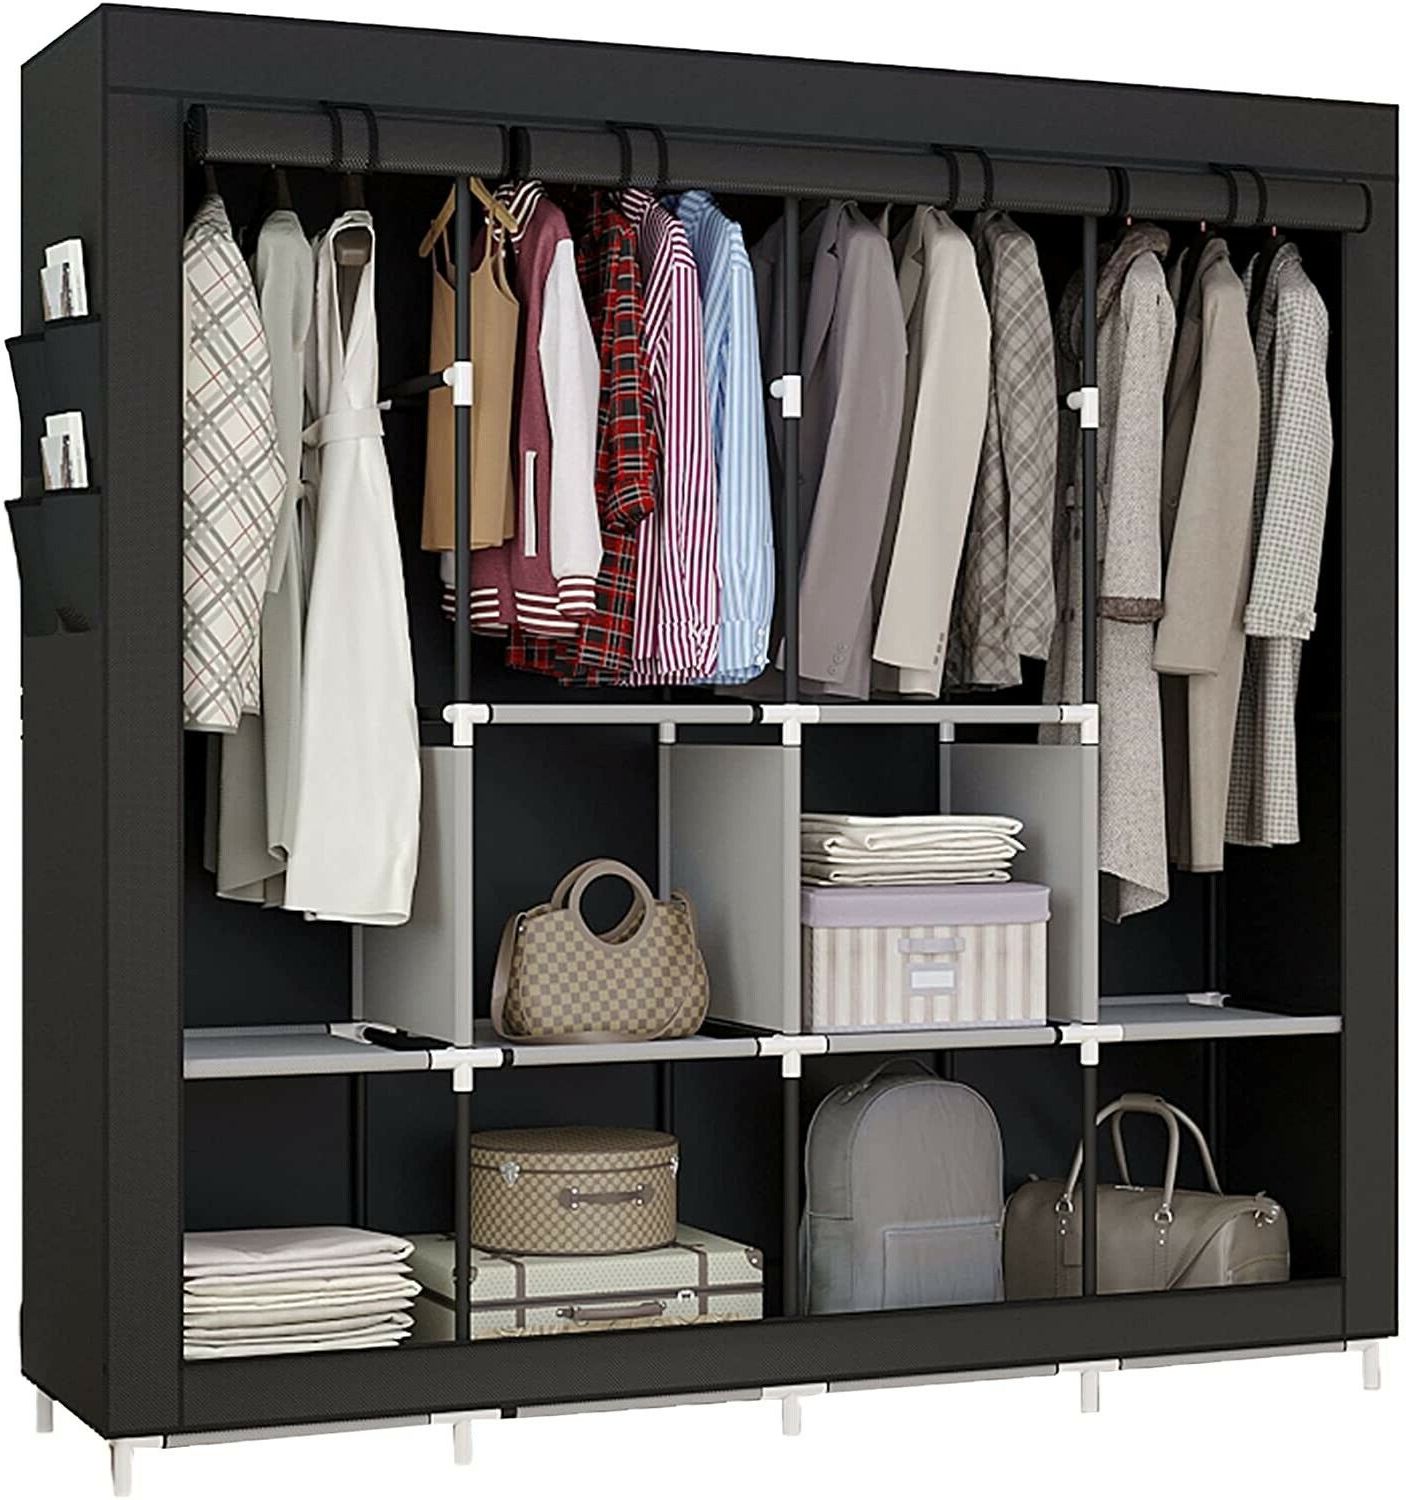 Portable Closet Large Wardrobe Closet Clothes Organizer 6 Storage Shelves  Black | Ebay With Regard To 6 Shelf Non Woven Wardrobes (Gallery 16 of 20)